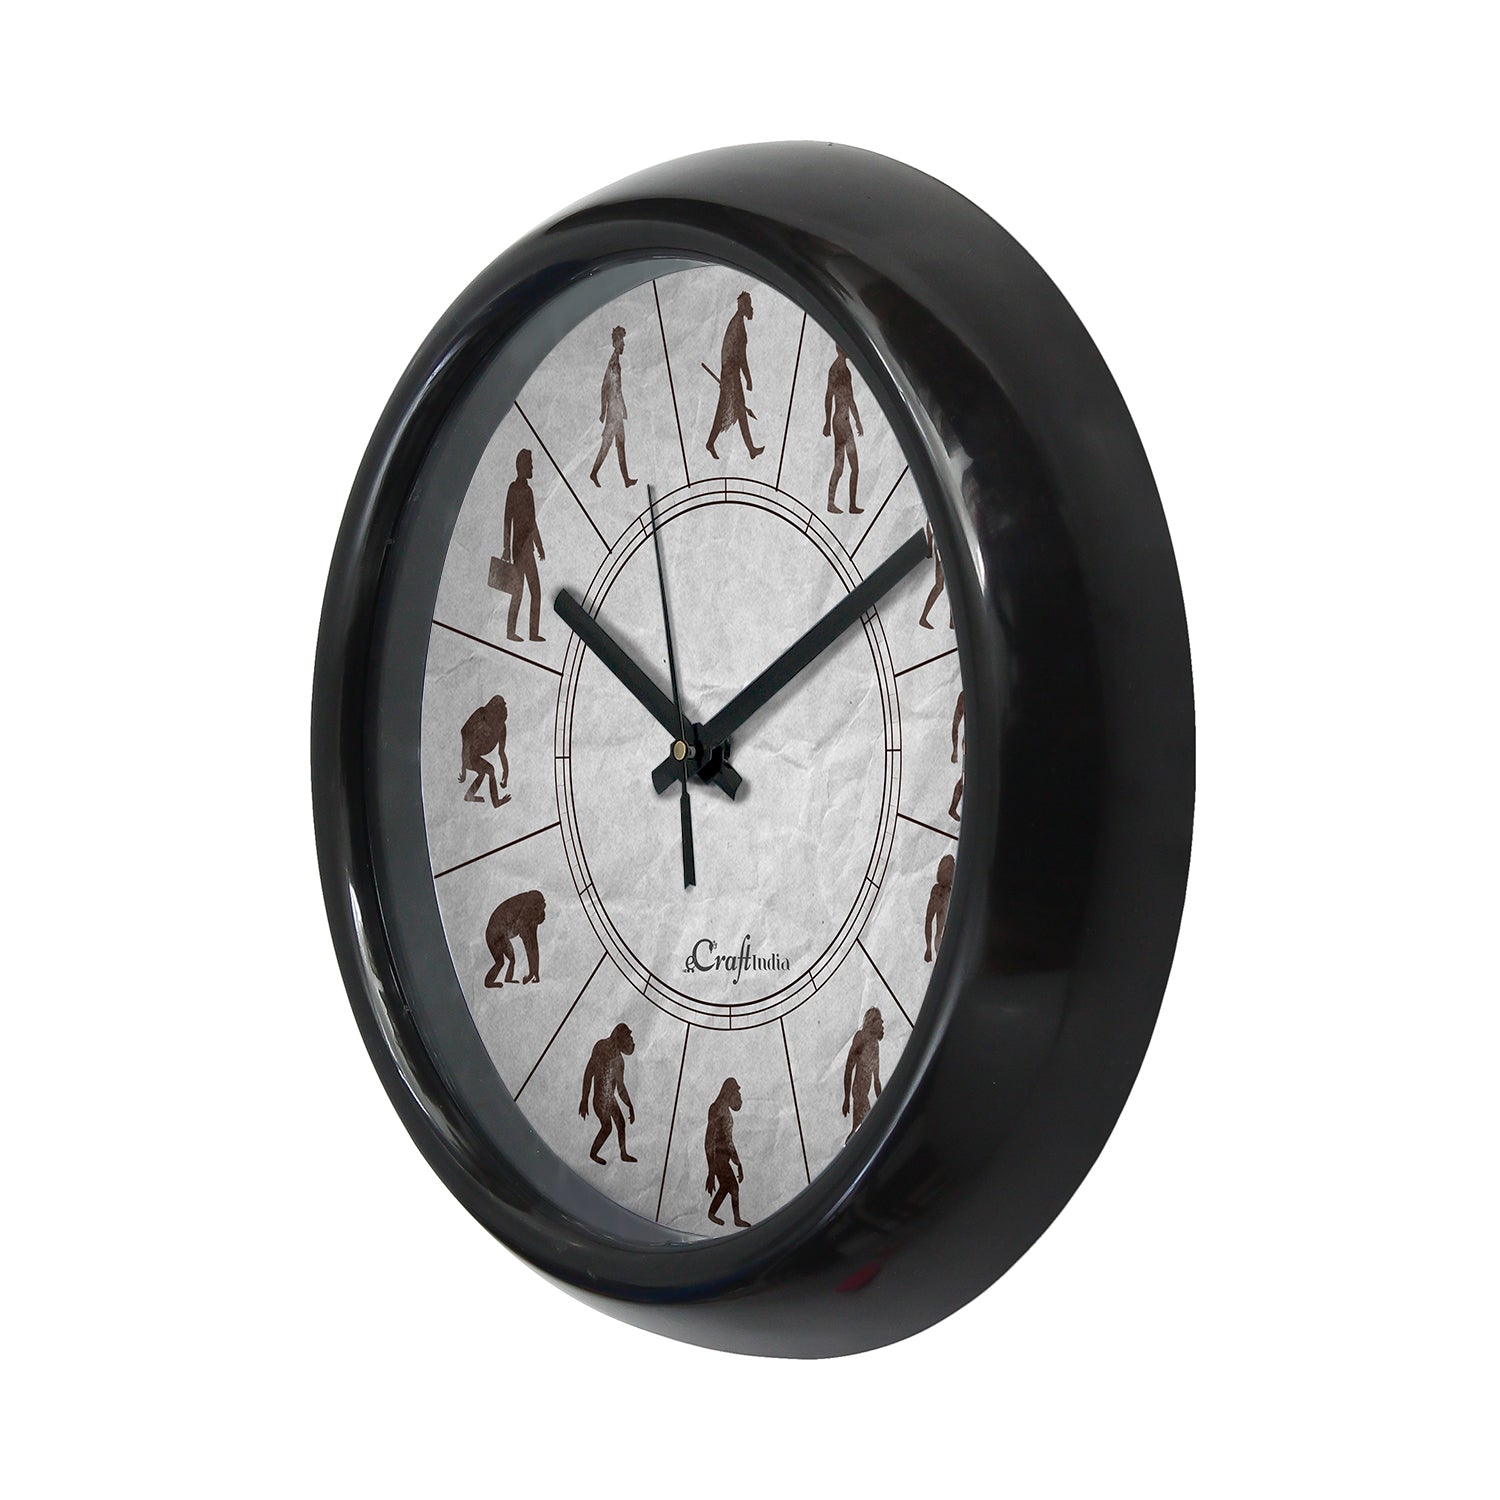 "Men Evolution" Designer Round Analog Black Wall Clock 4